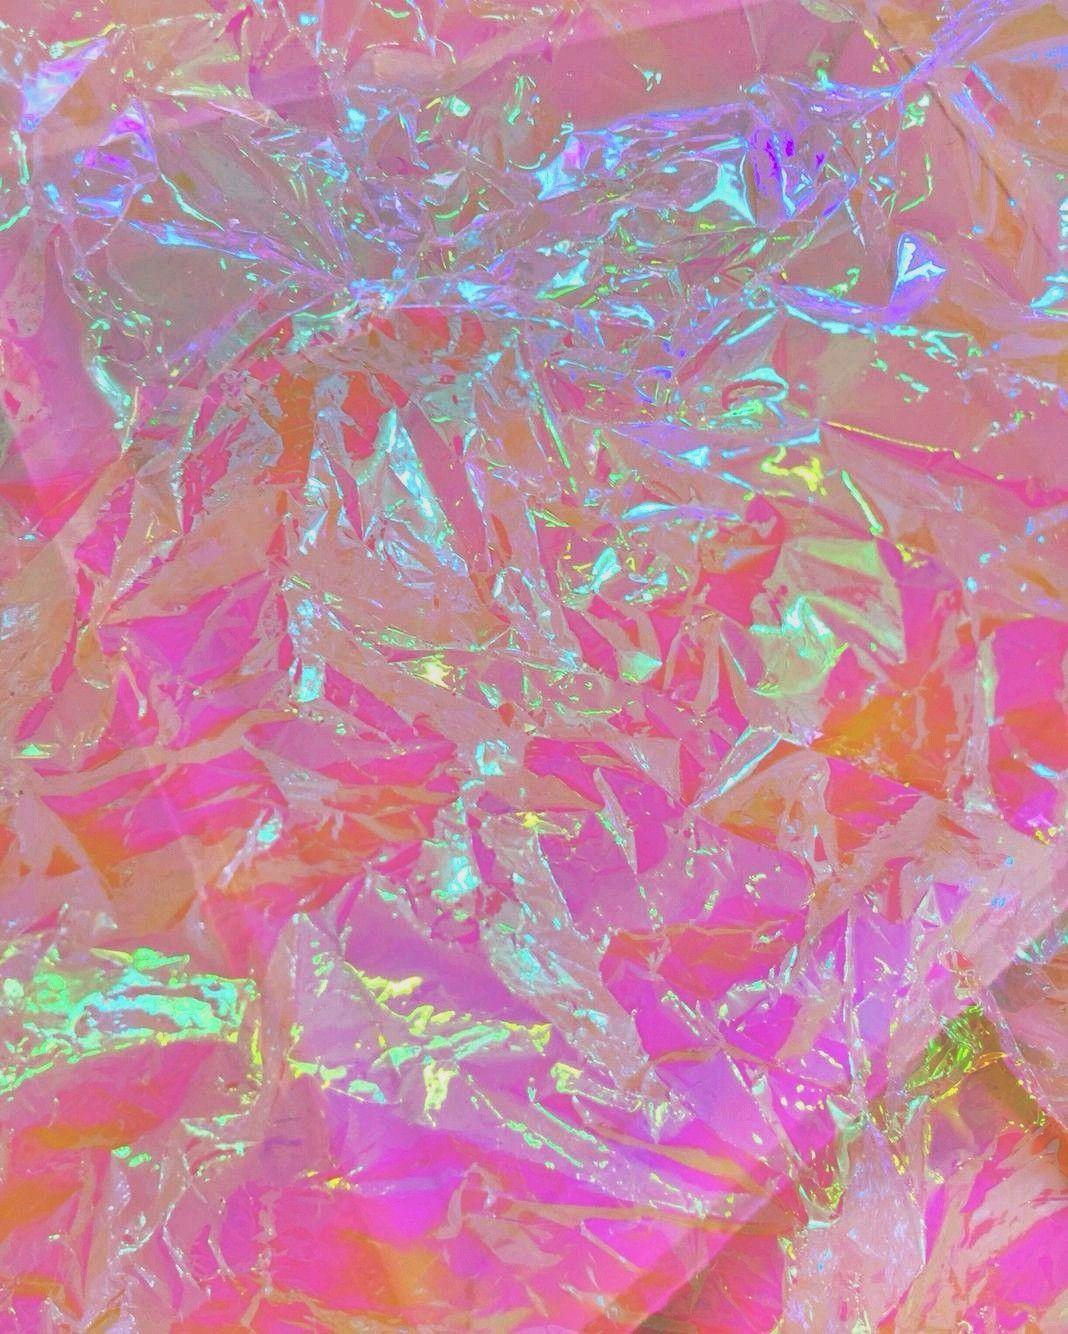 Pink Hologram Wallpapers - Top Free Pink Hologram Backgrounds ...